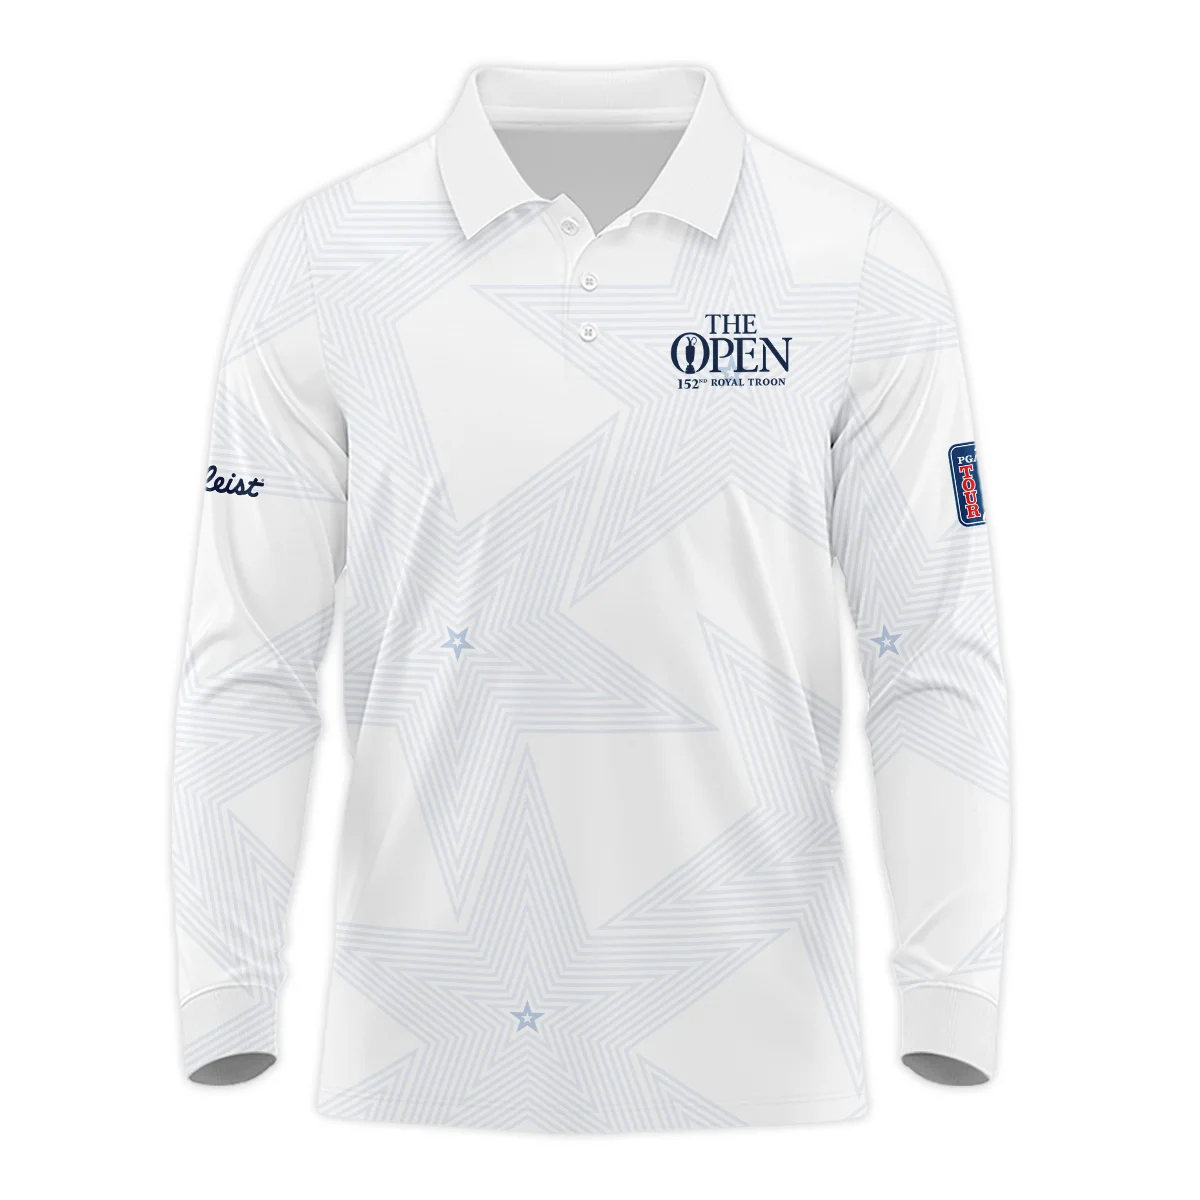 The 152nd Open Championship Golf Sport Titleist Stand Colar Jacket Sports Star Sripe White Navy Stand Colar Jacket